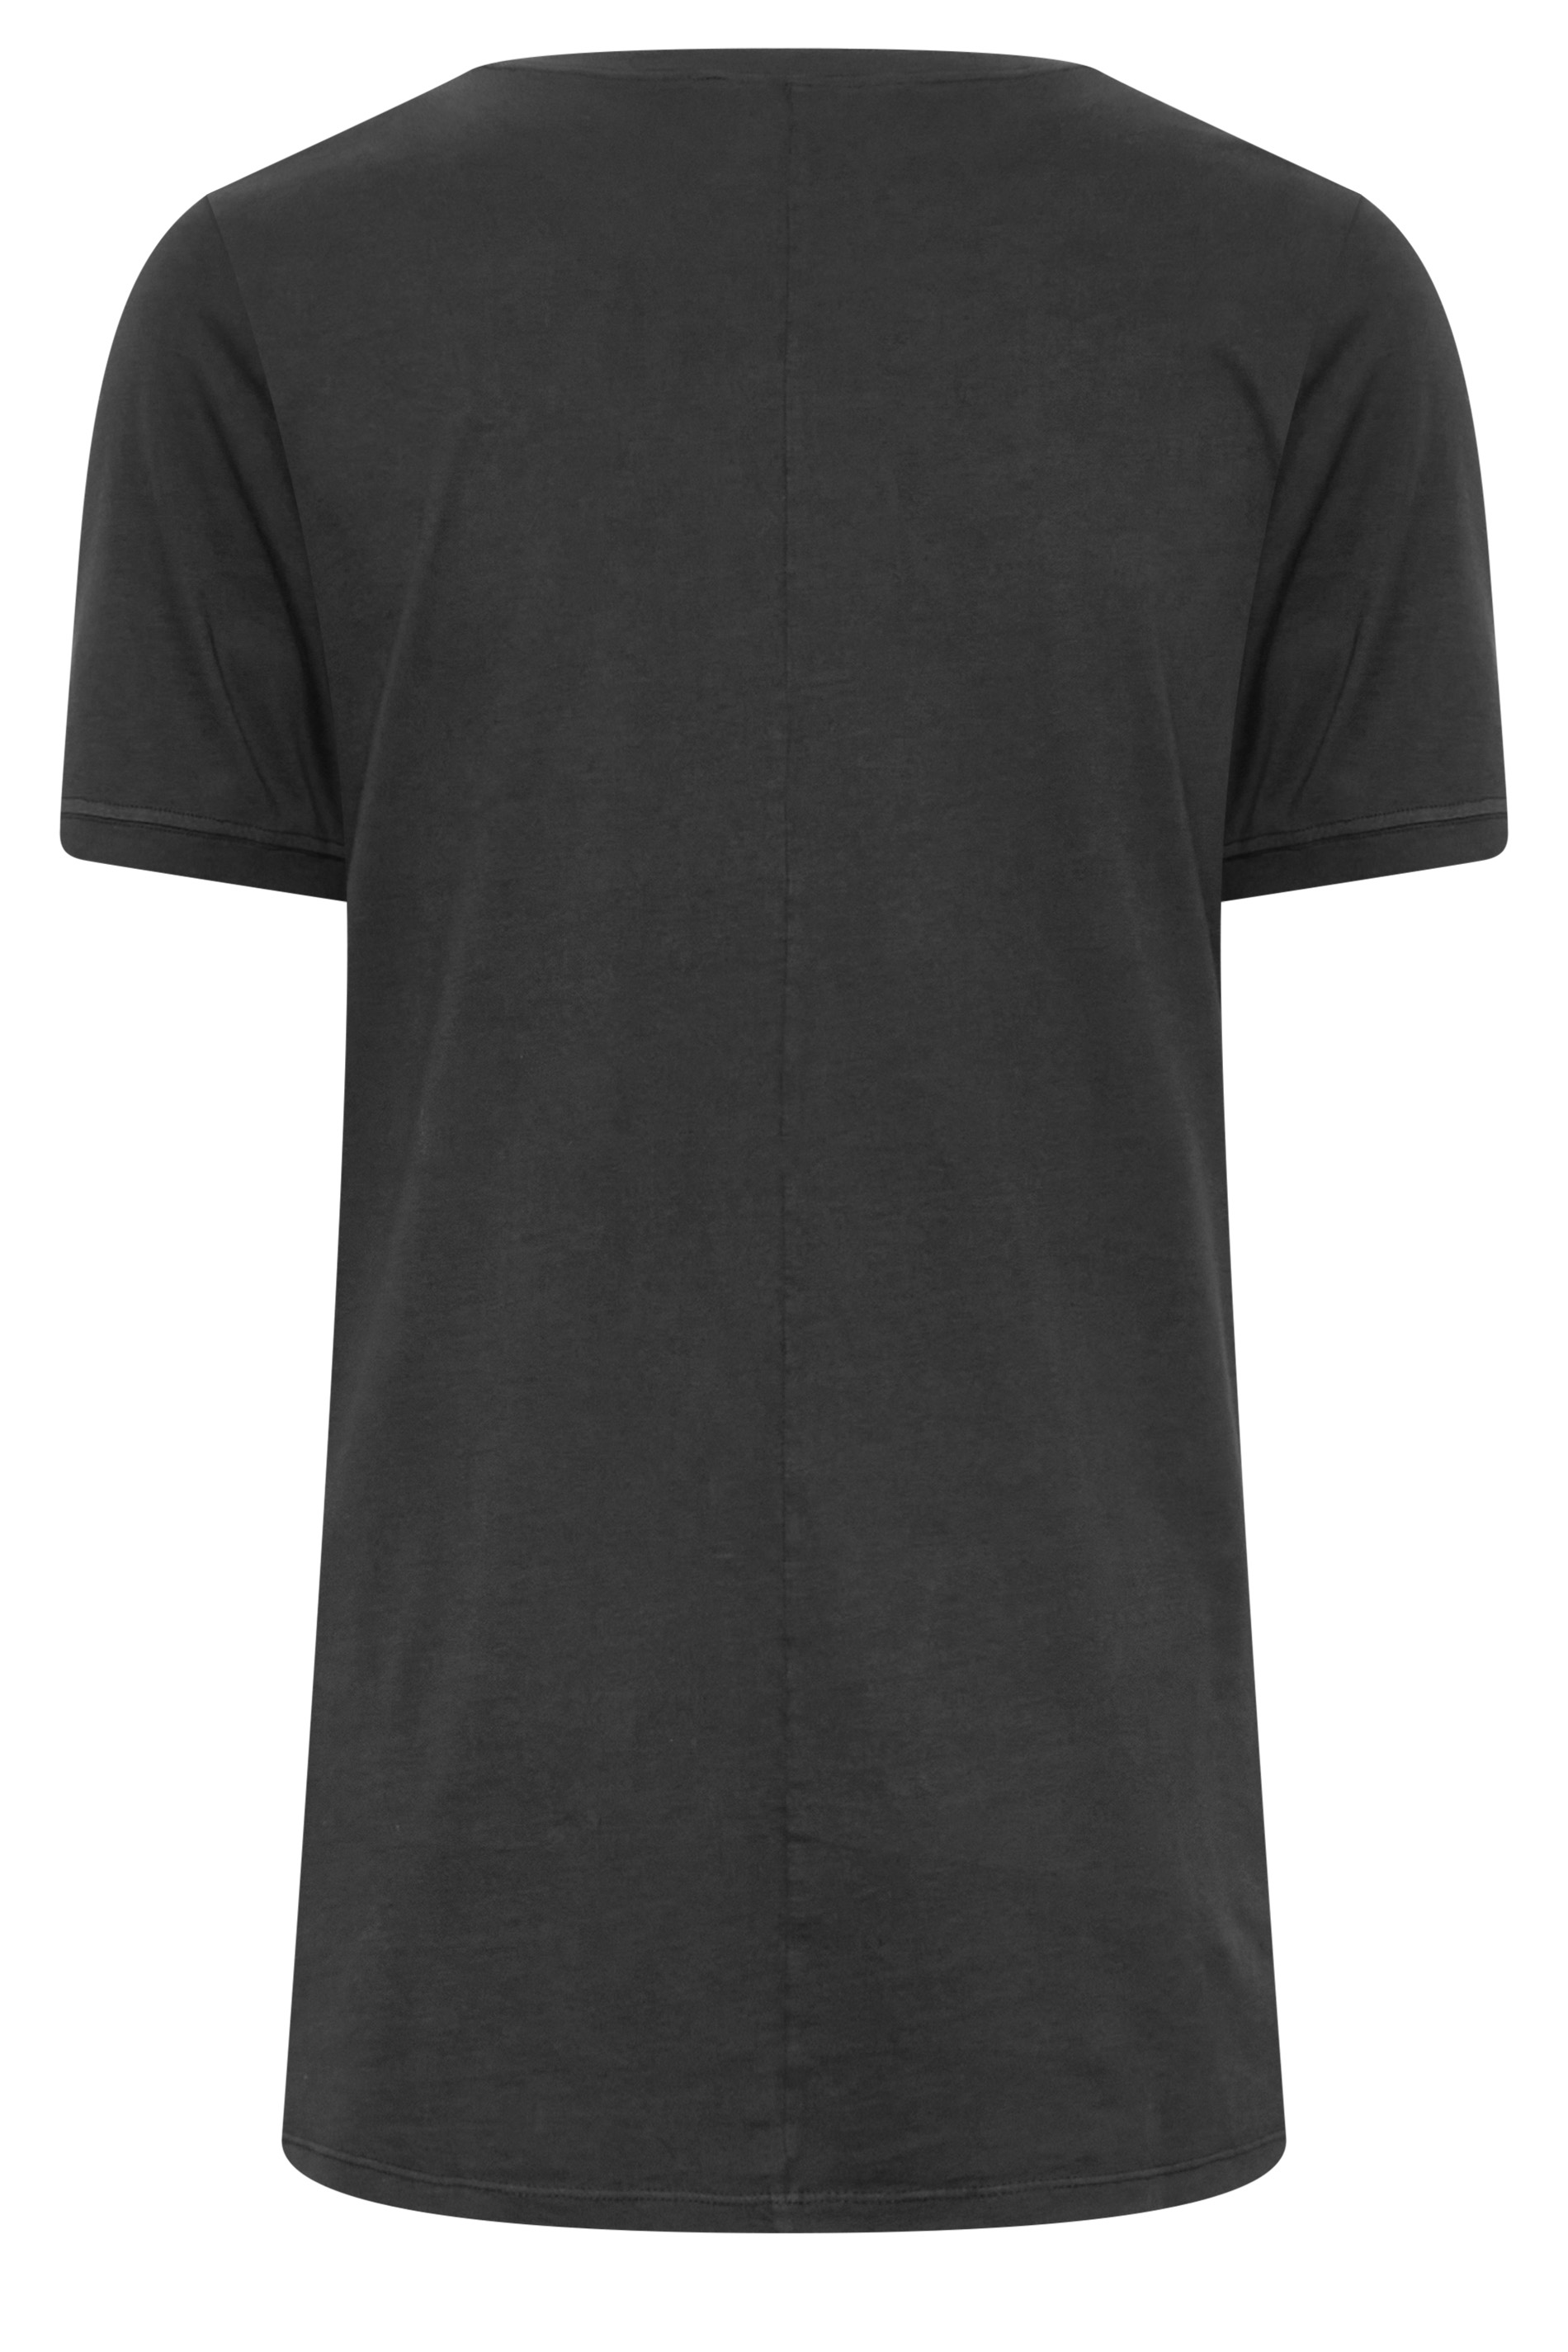 YOURS Plus Size Curve Black Embellished T-Shirt